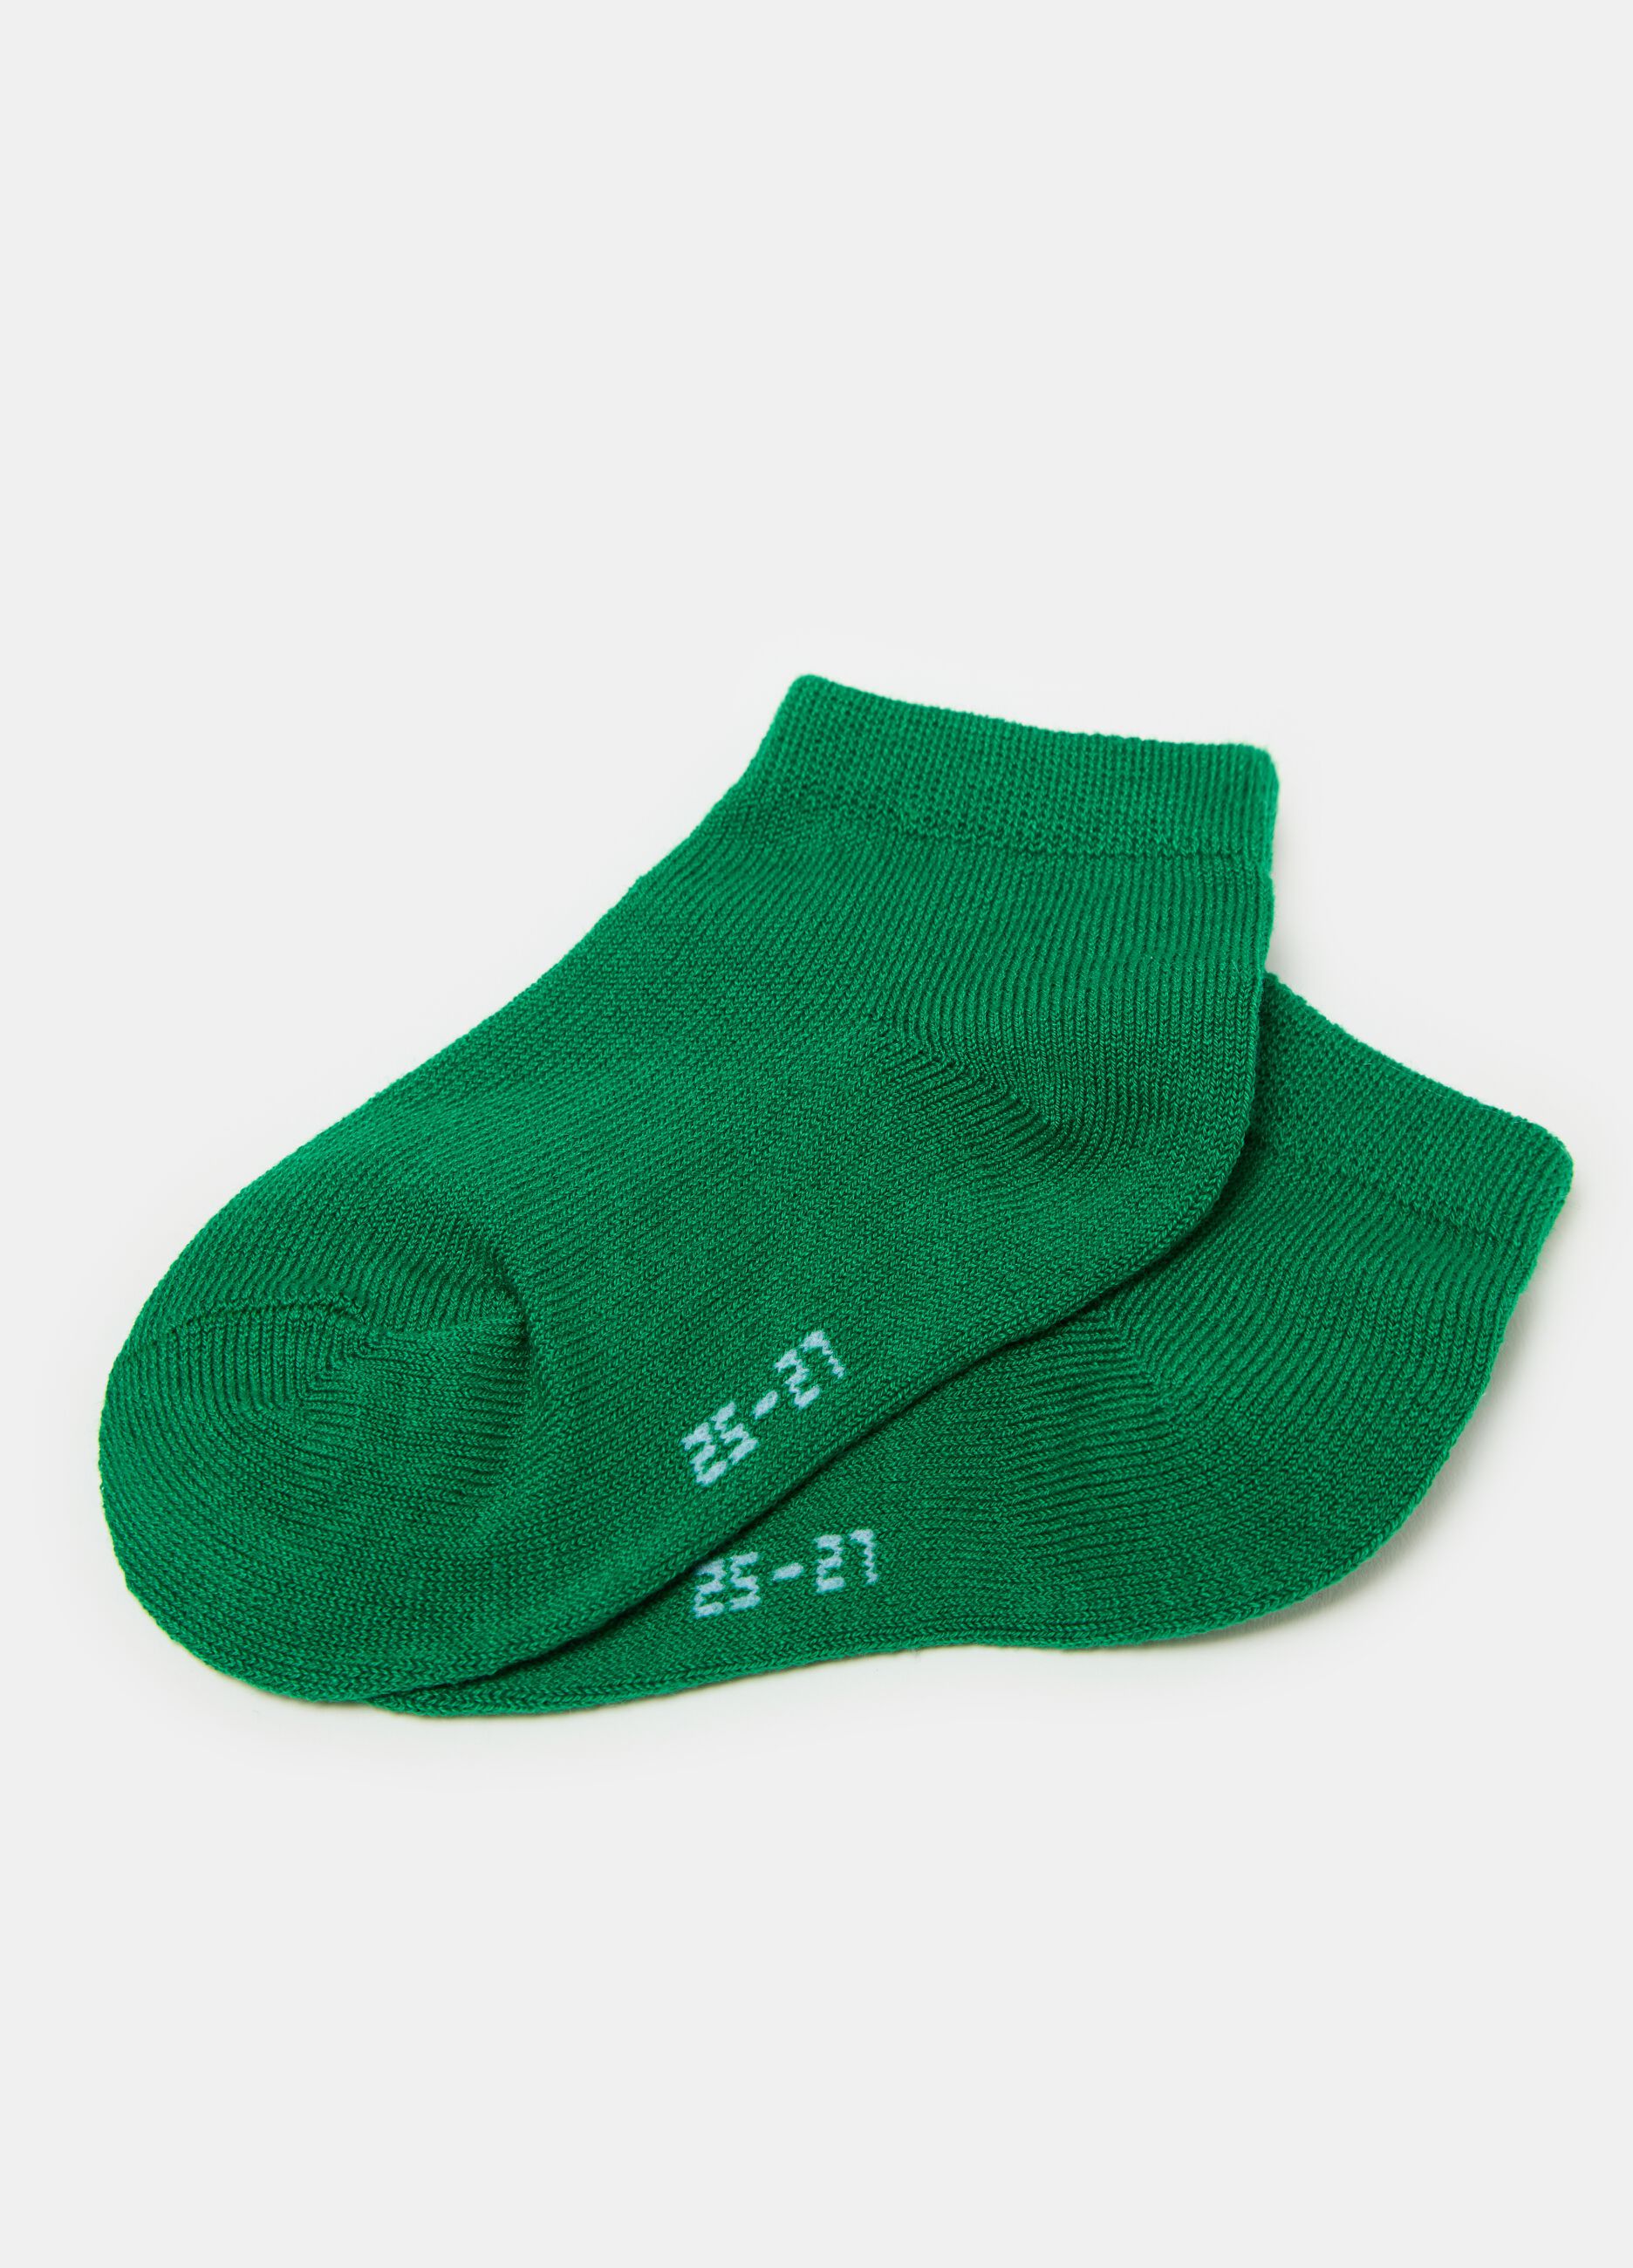 Five-pair pack short stretch socks